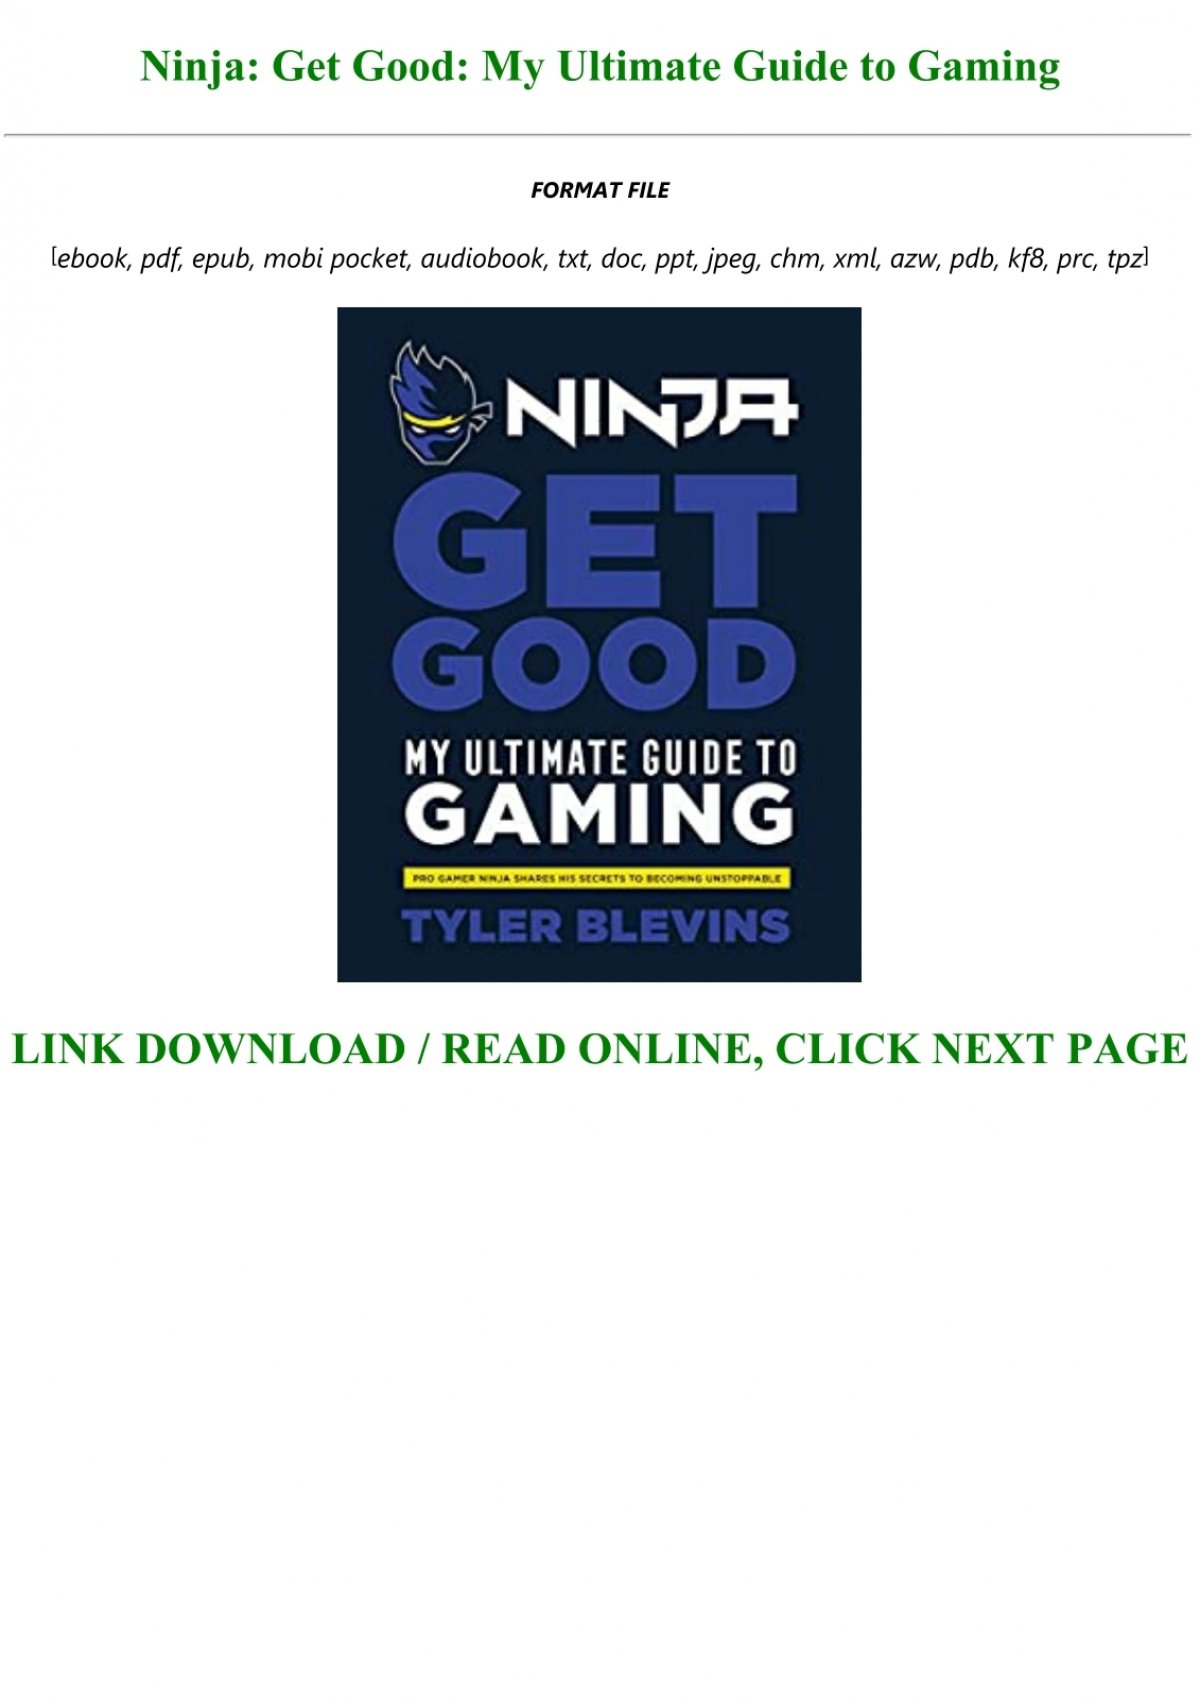 Ninja: Get Good: My Ultimate Guide to Gaming by Tyler Ninja Blevins